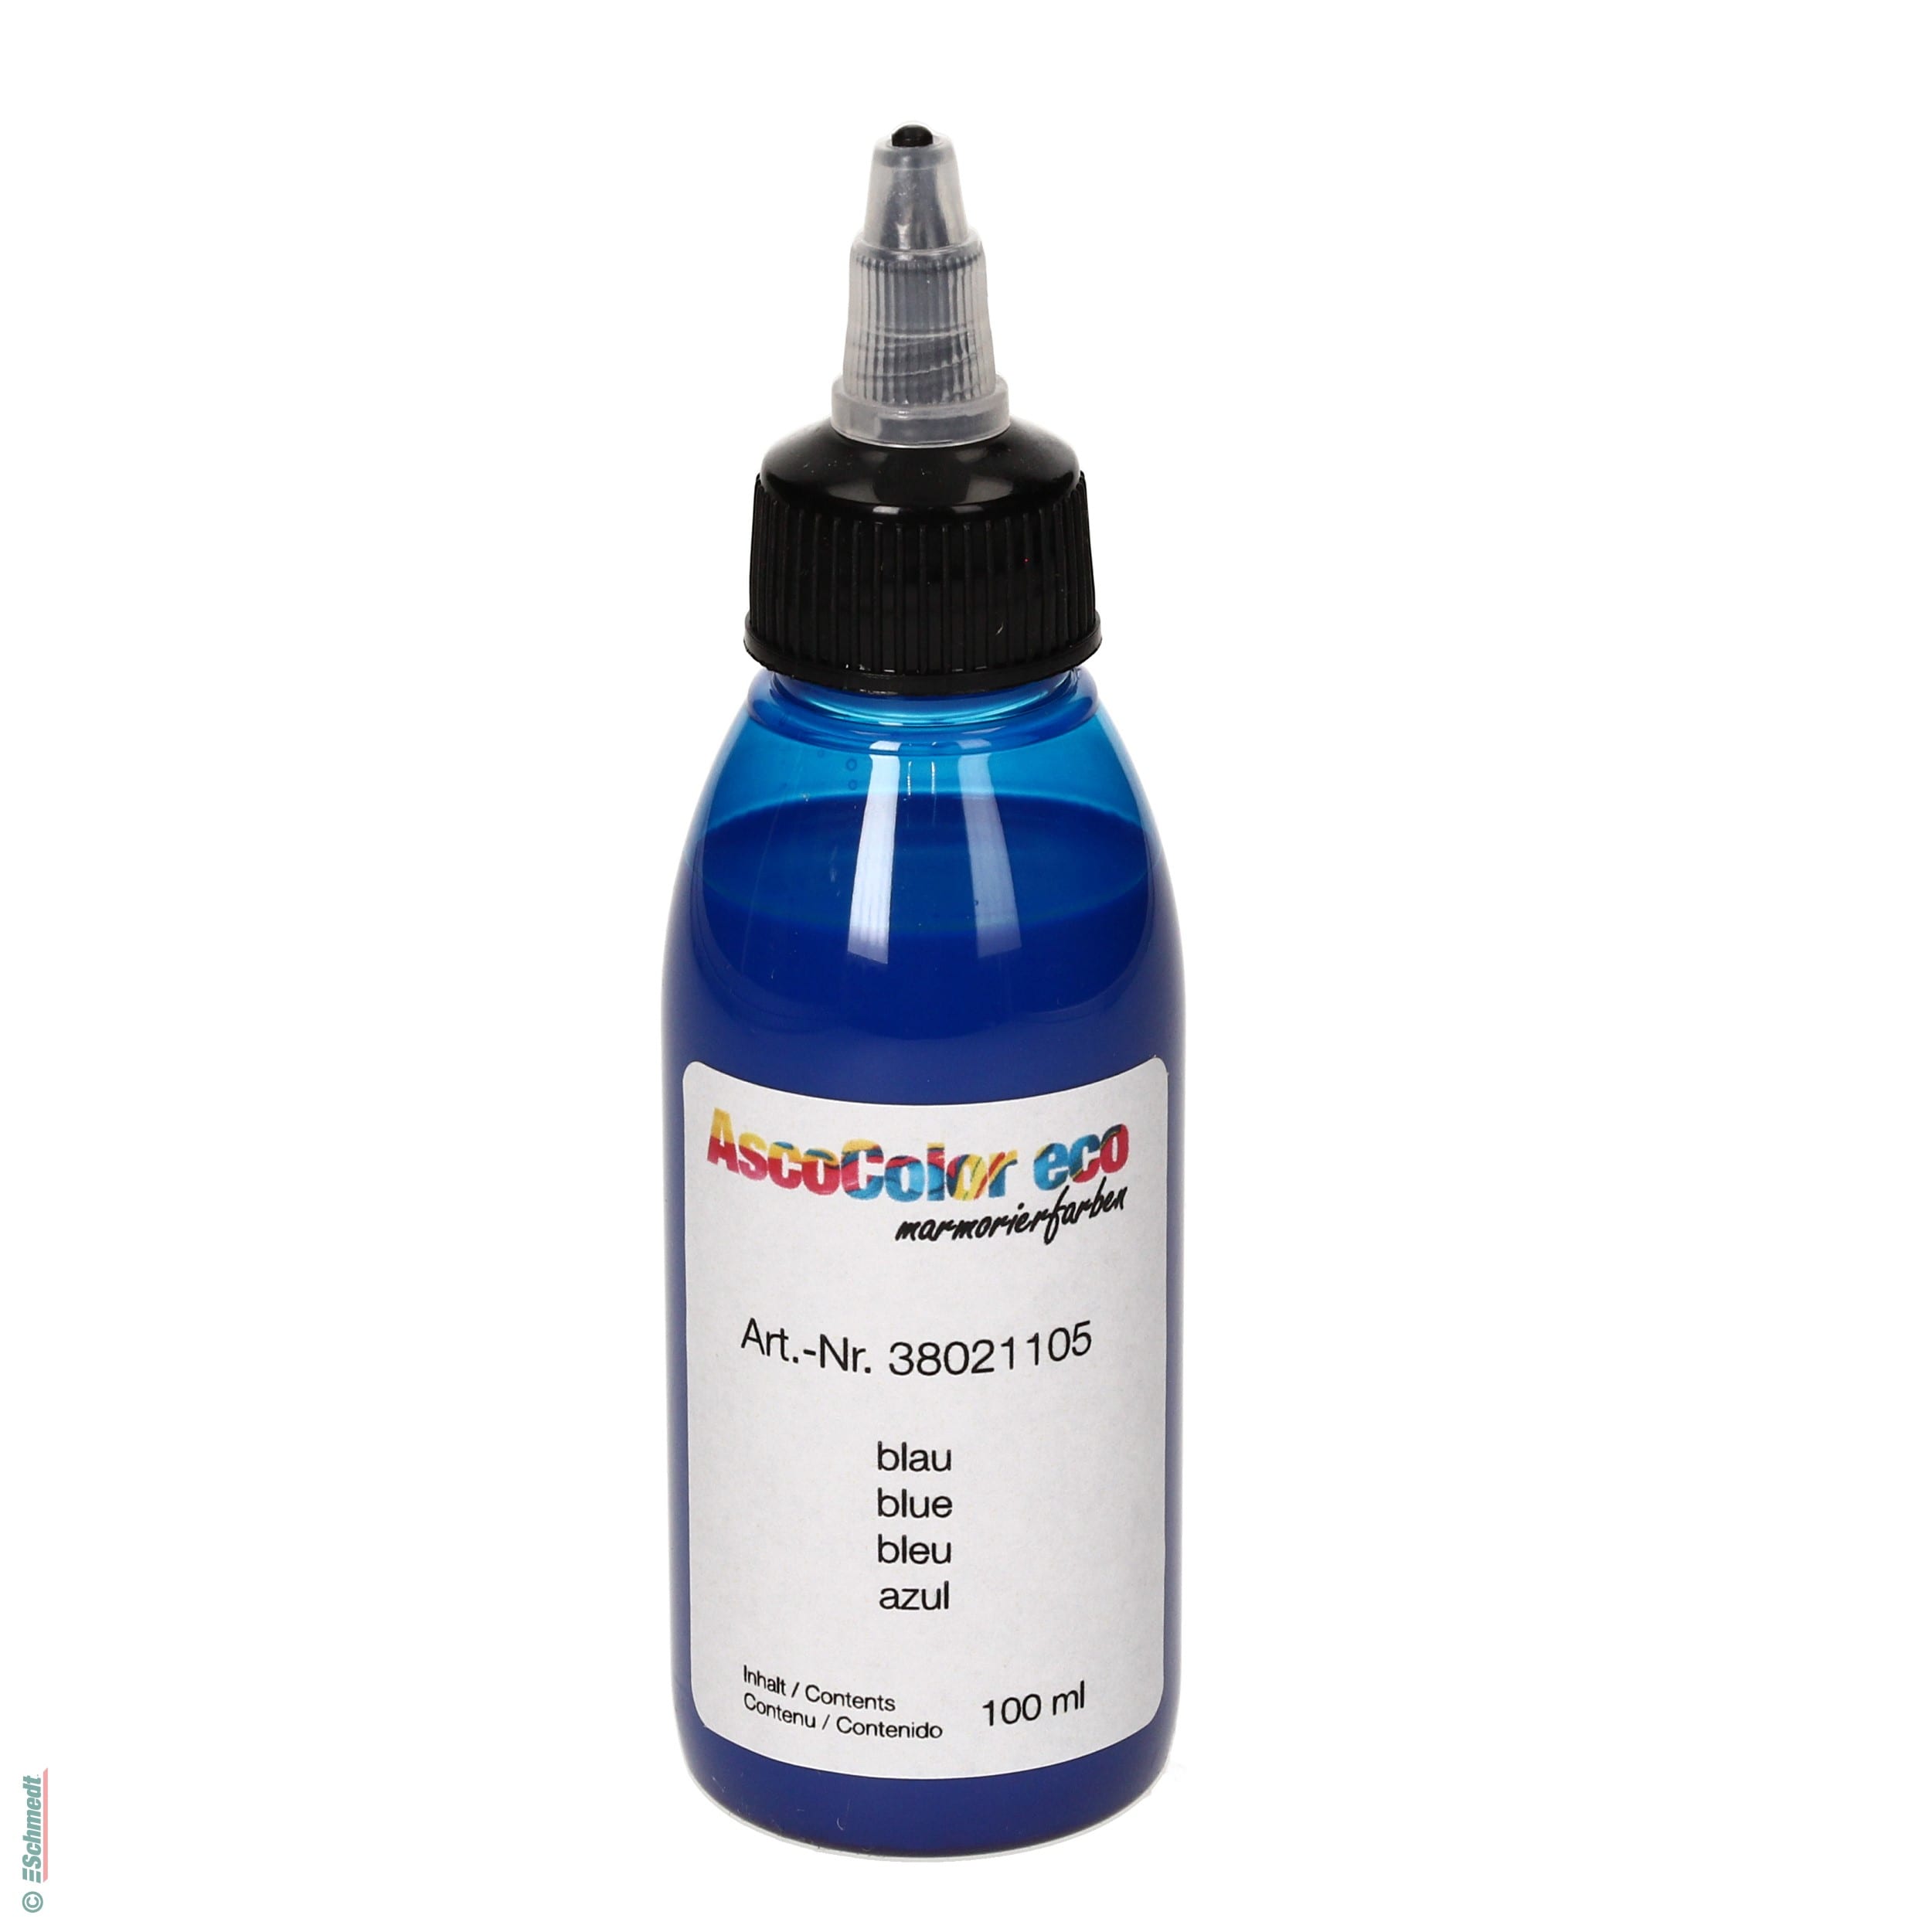 AscoColor eco - Pintura para marmolar - Color 105 - azul - Contenido Botella / 100 ml - Aplicación: para crear sus propios papeles marmolado...